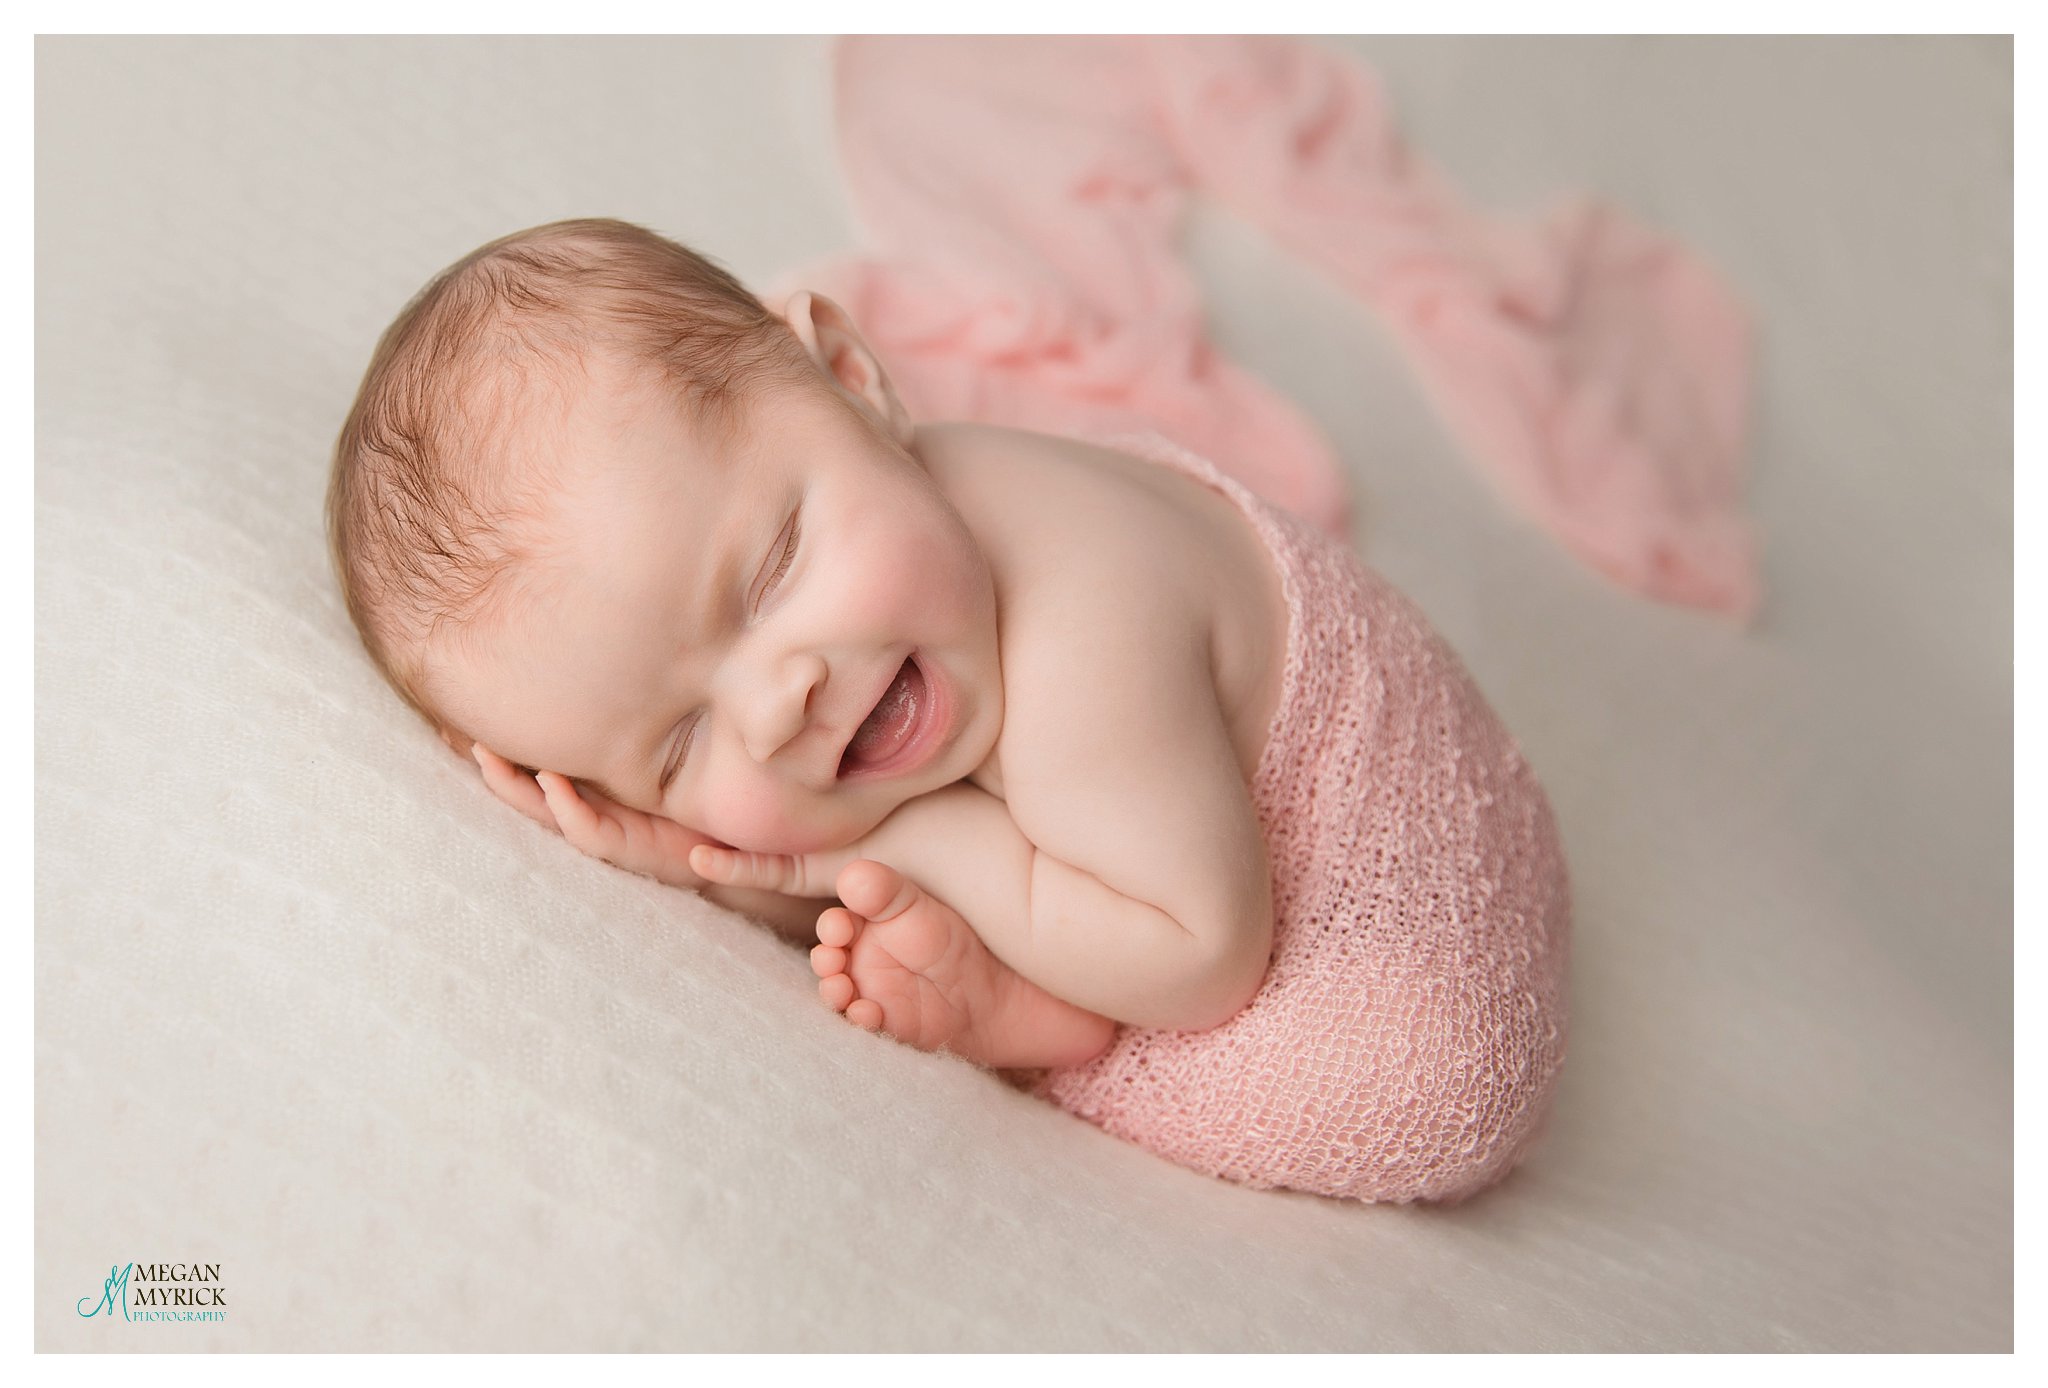 Hinesville Newborn Photographer | Megan Myrick Photography | www.meganmyrickphotography.com